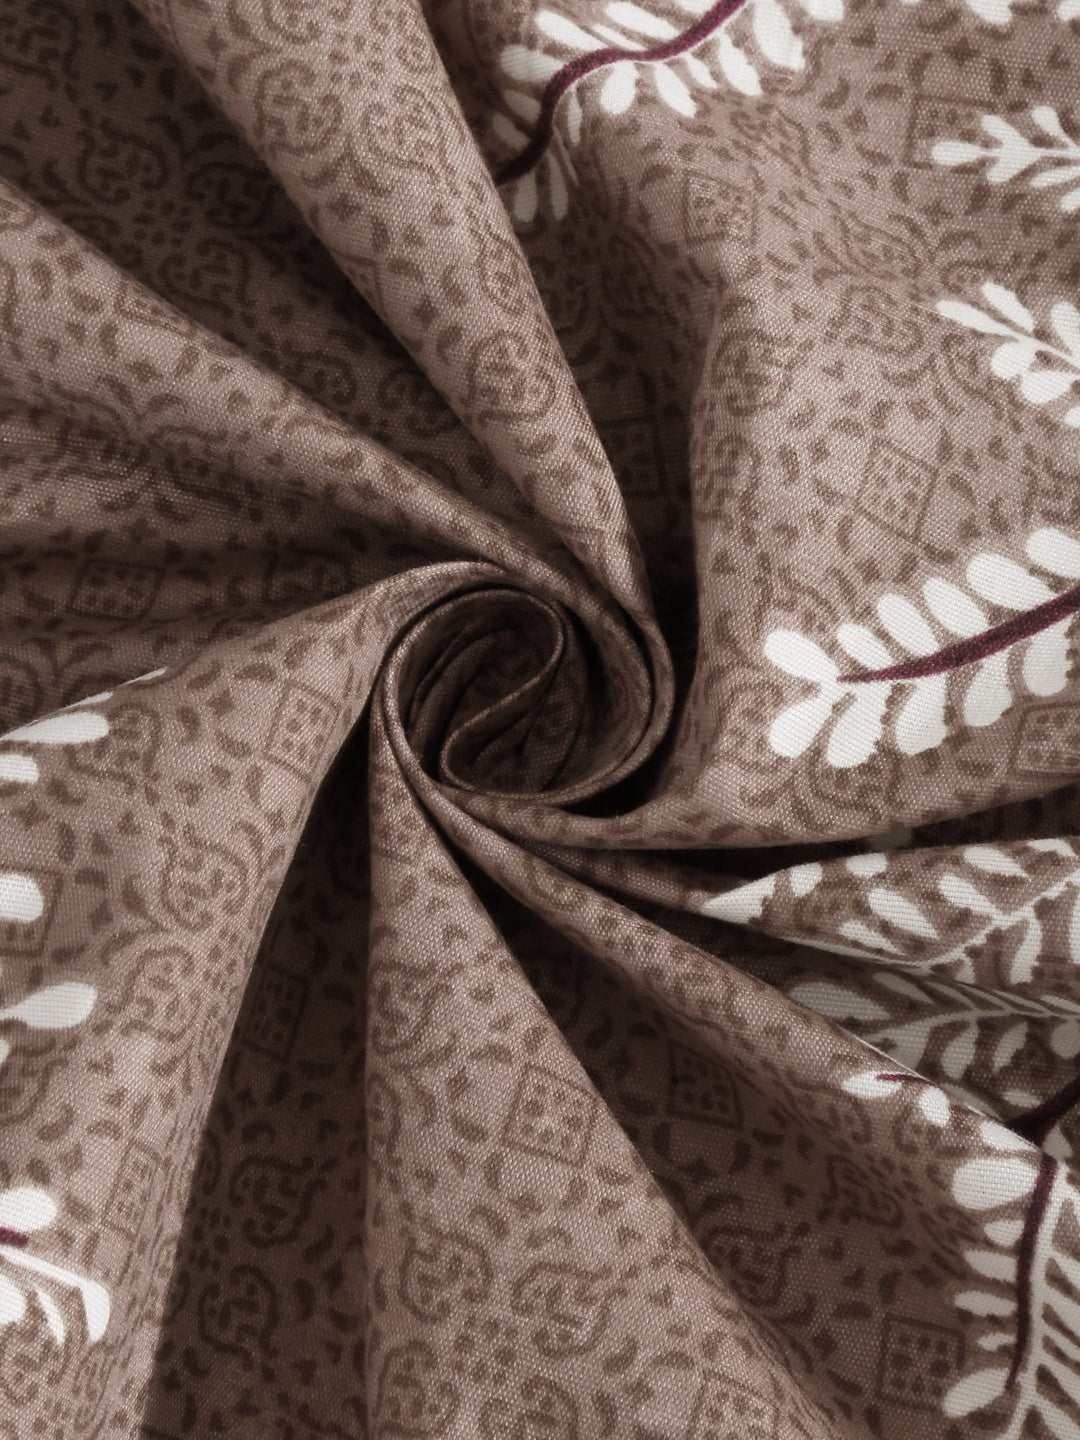 Klotthe Multicolor Floral 300 TC Cotton Blend Double Bedsheet with 4 Pillow Covers